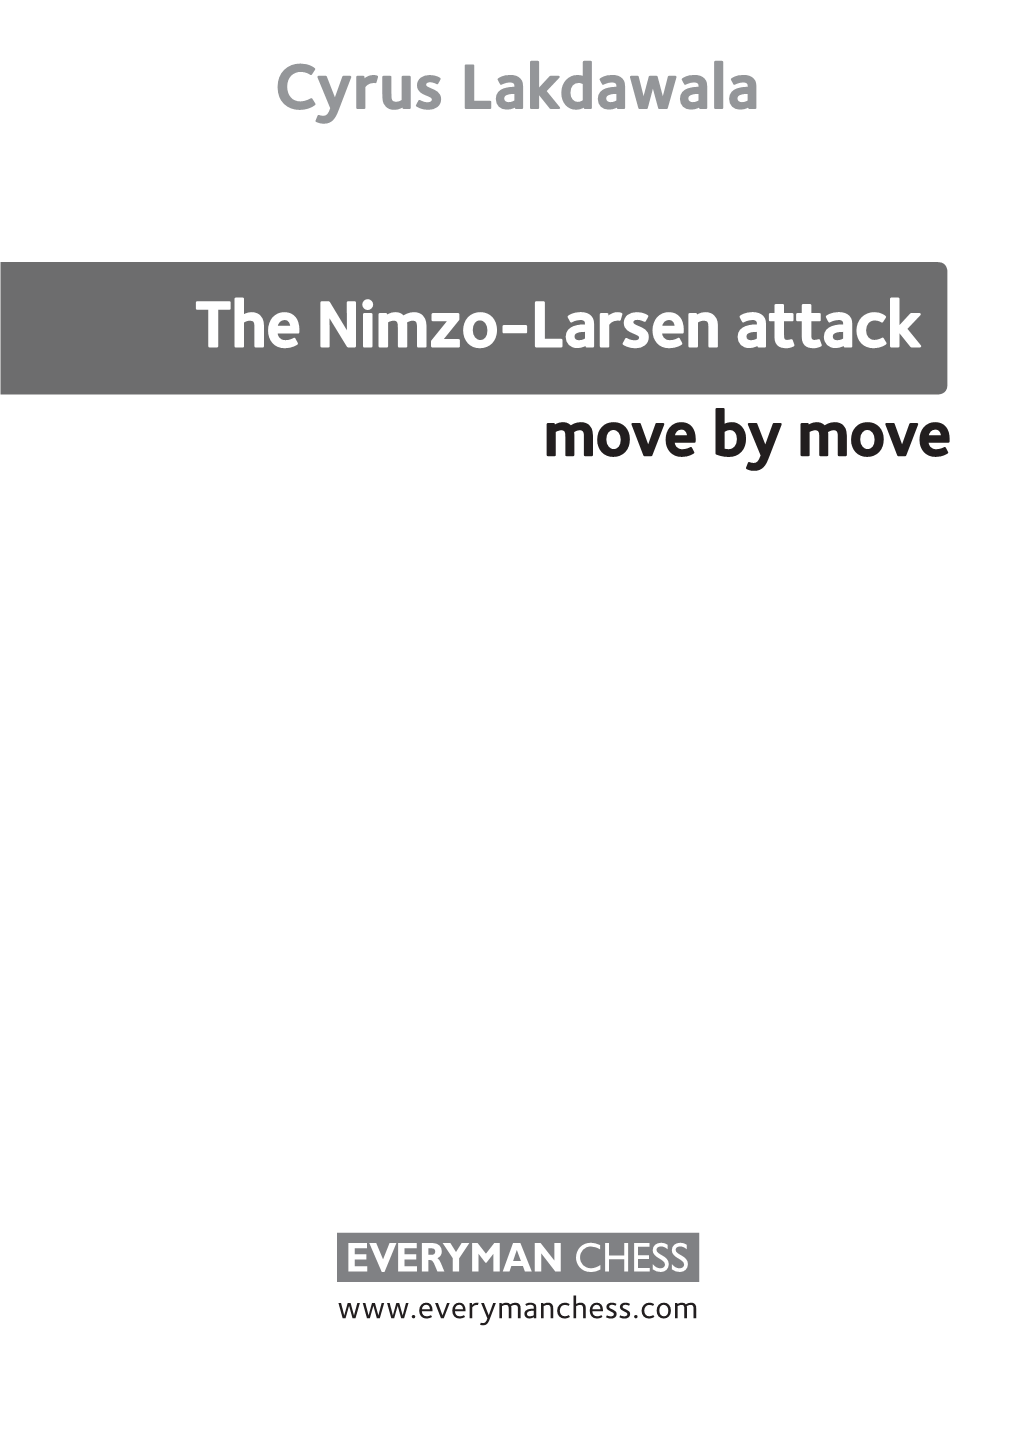 The Nimzo-Larsen Attack Move by Move